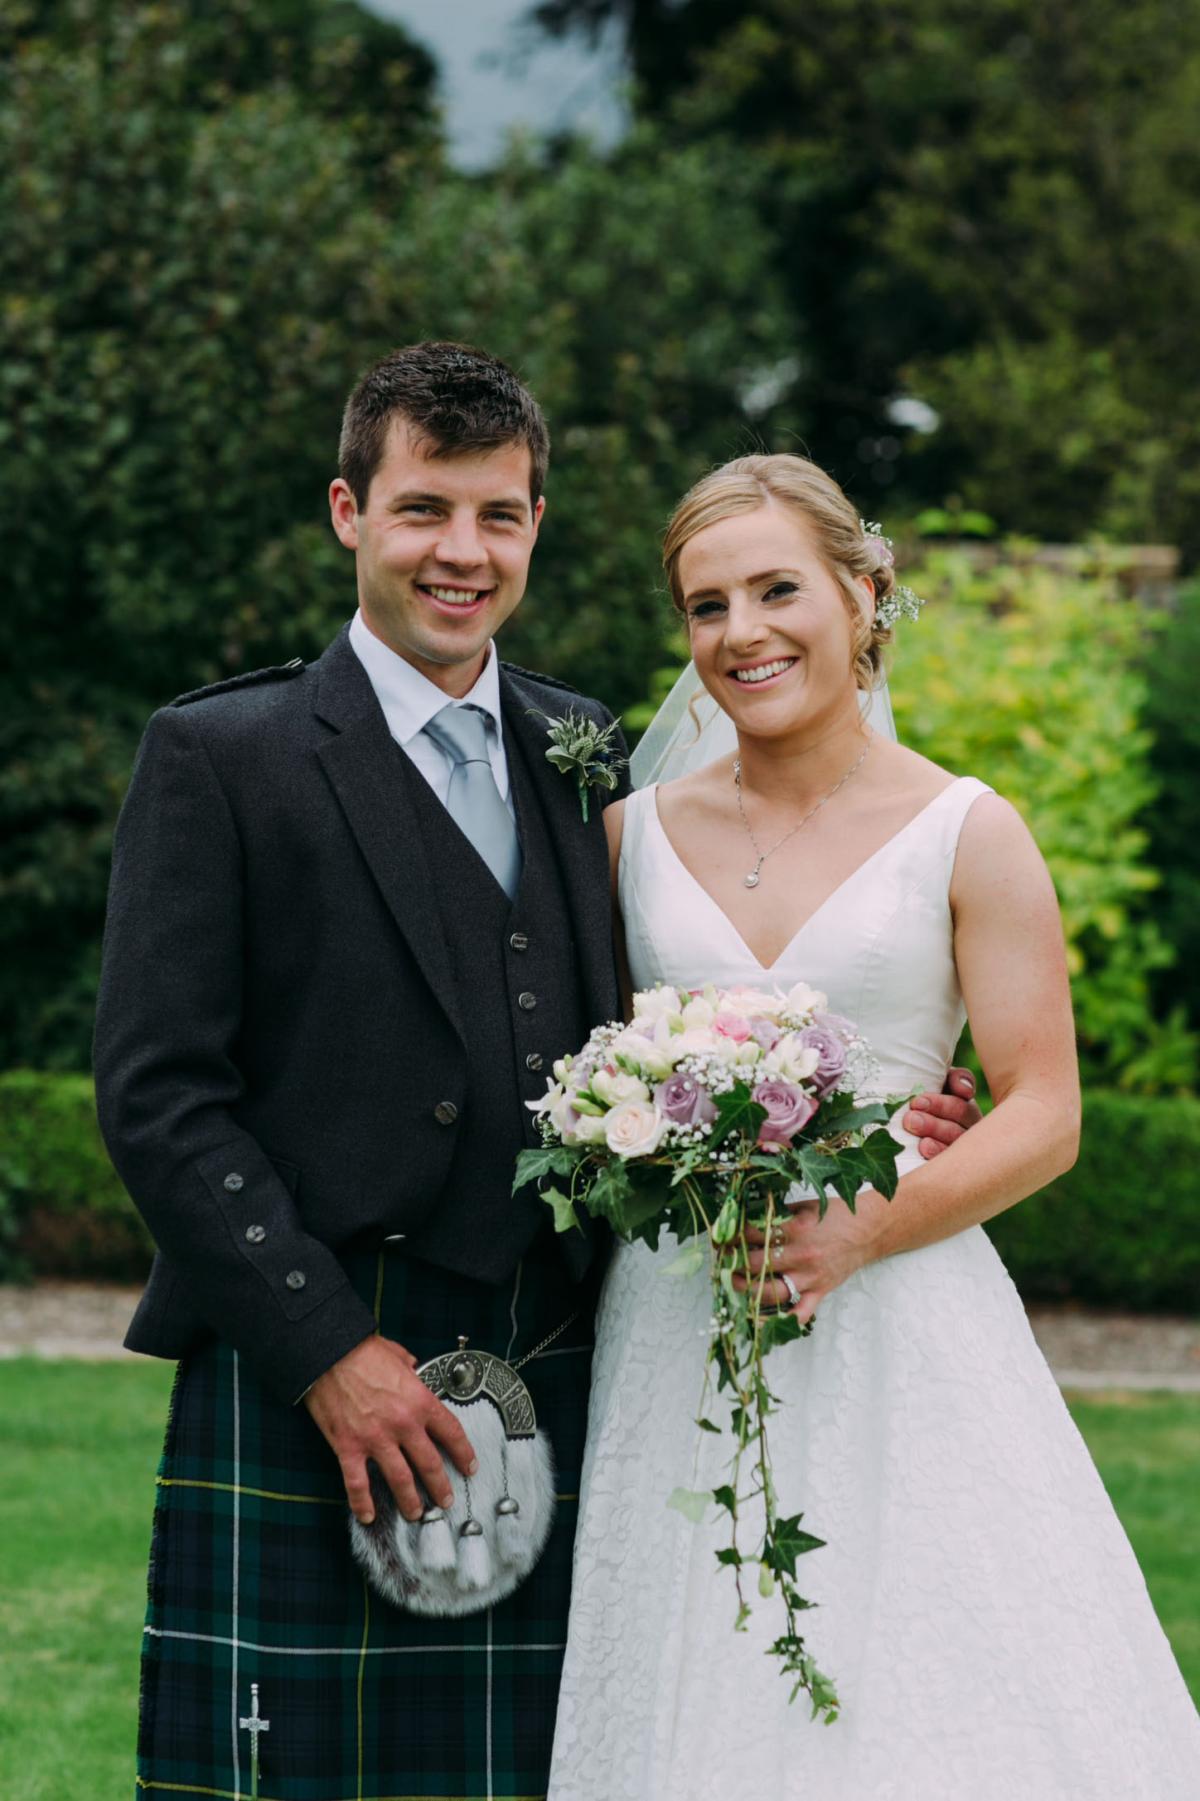 Lynn Paterson, Golland Farm, Kinross, and Matthew Jack, Carriston Farm, Fife, were married at Golland Farm, Kinross. Photo: Eilidh Robertson Photography